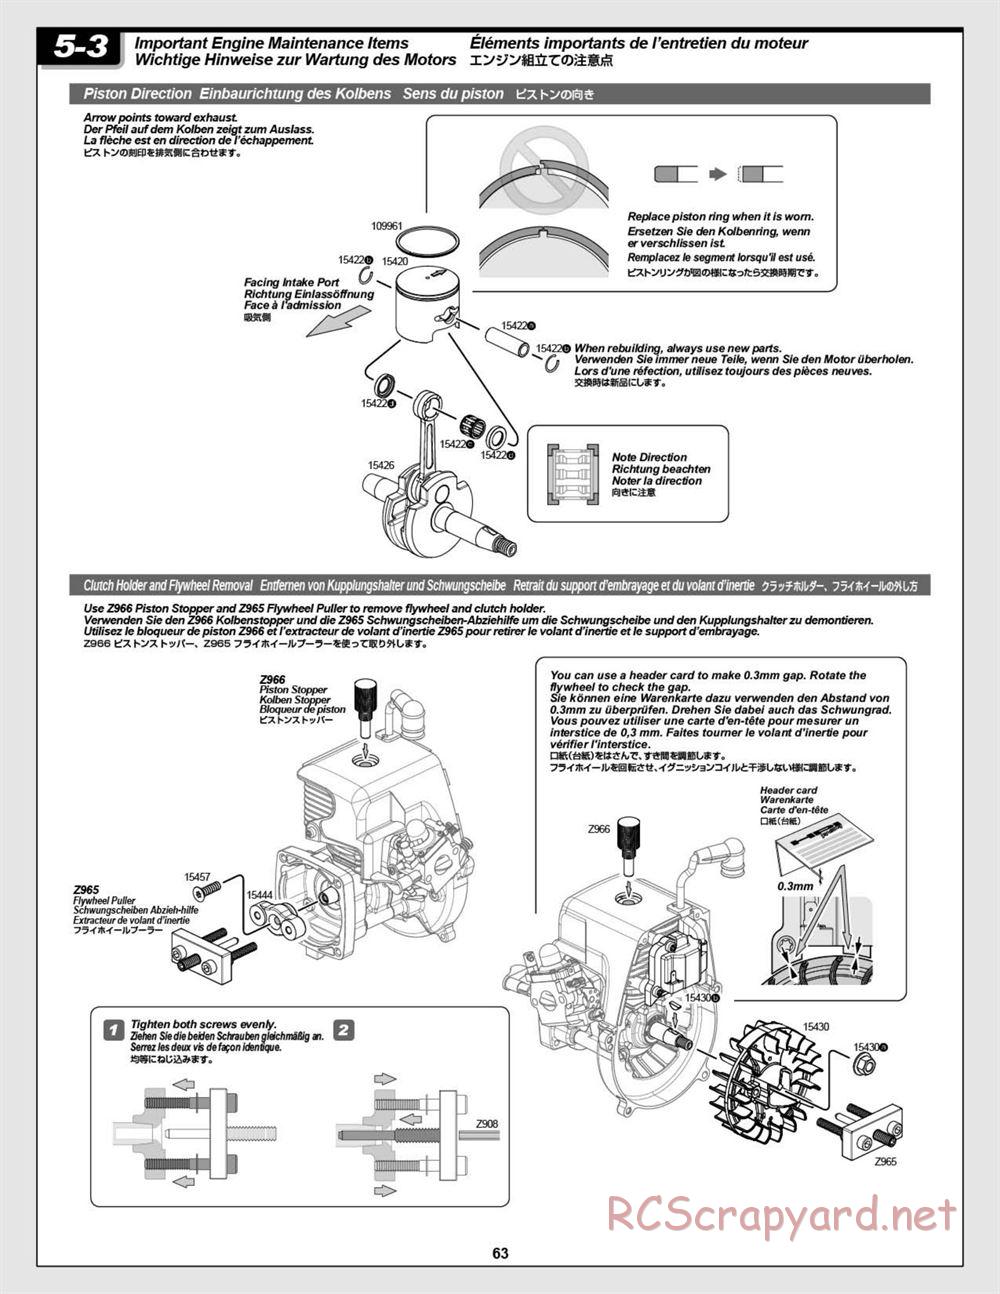 HPI - Baja 5B 2.0 RTR - Manual - Page 63